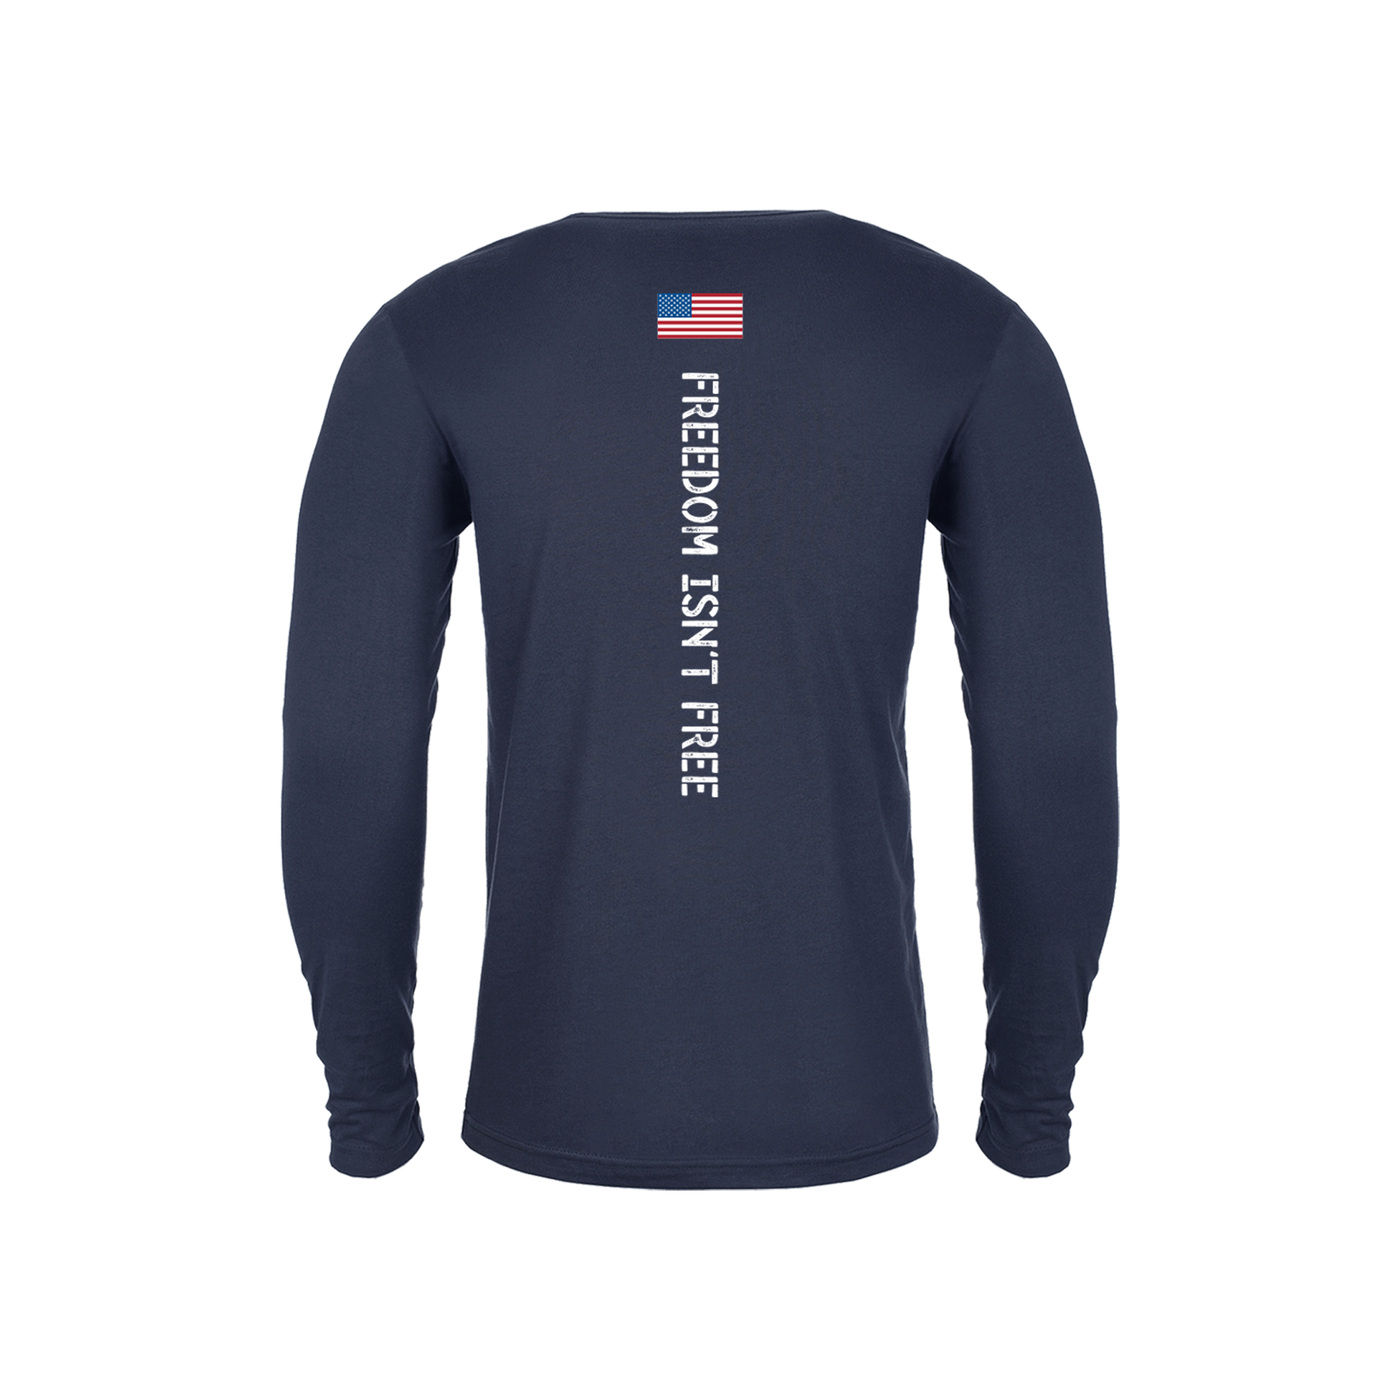 Freedom Isn't Free - Long Sleeve Technical Shirt - Navy